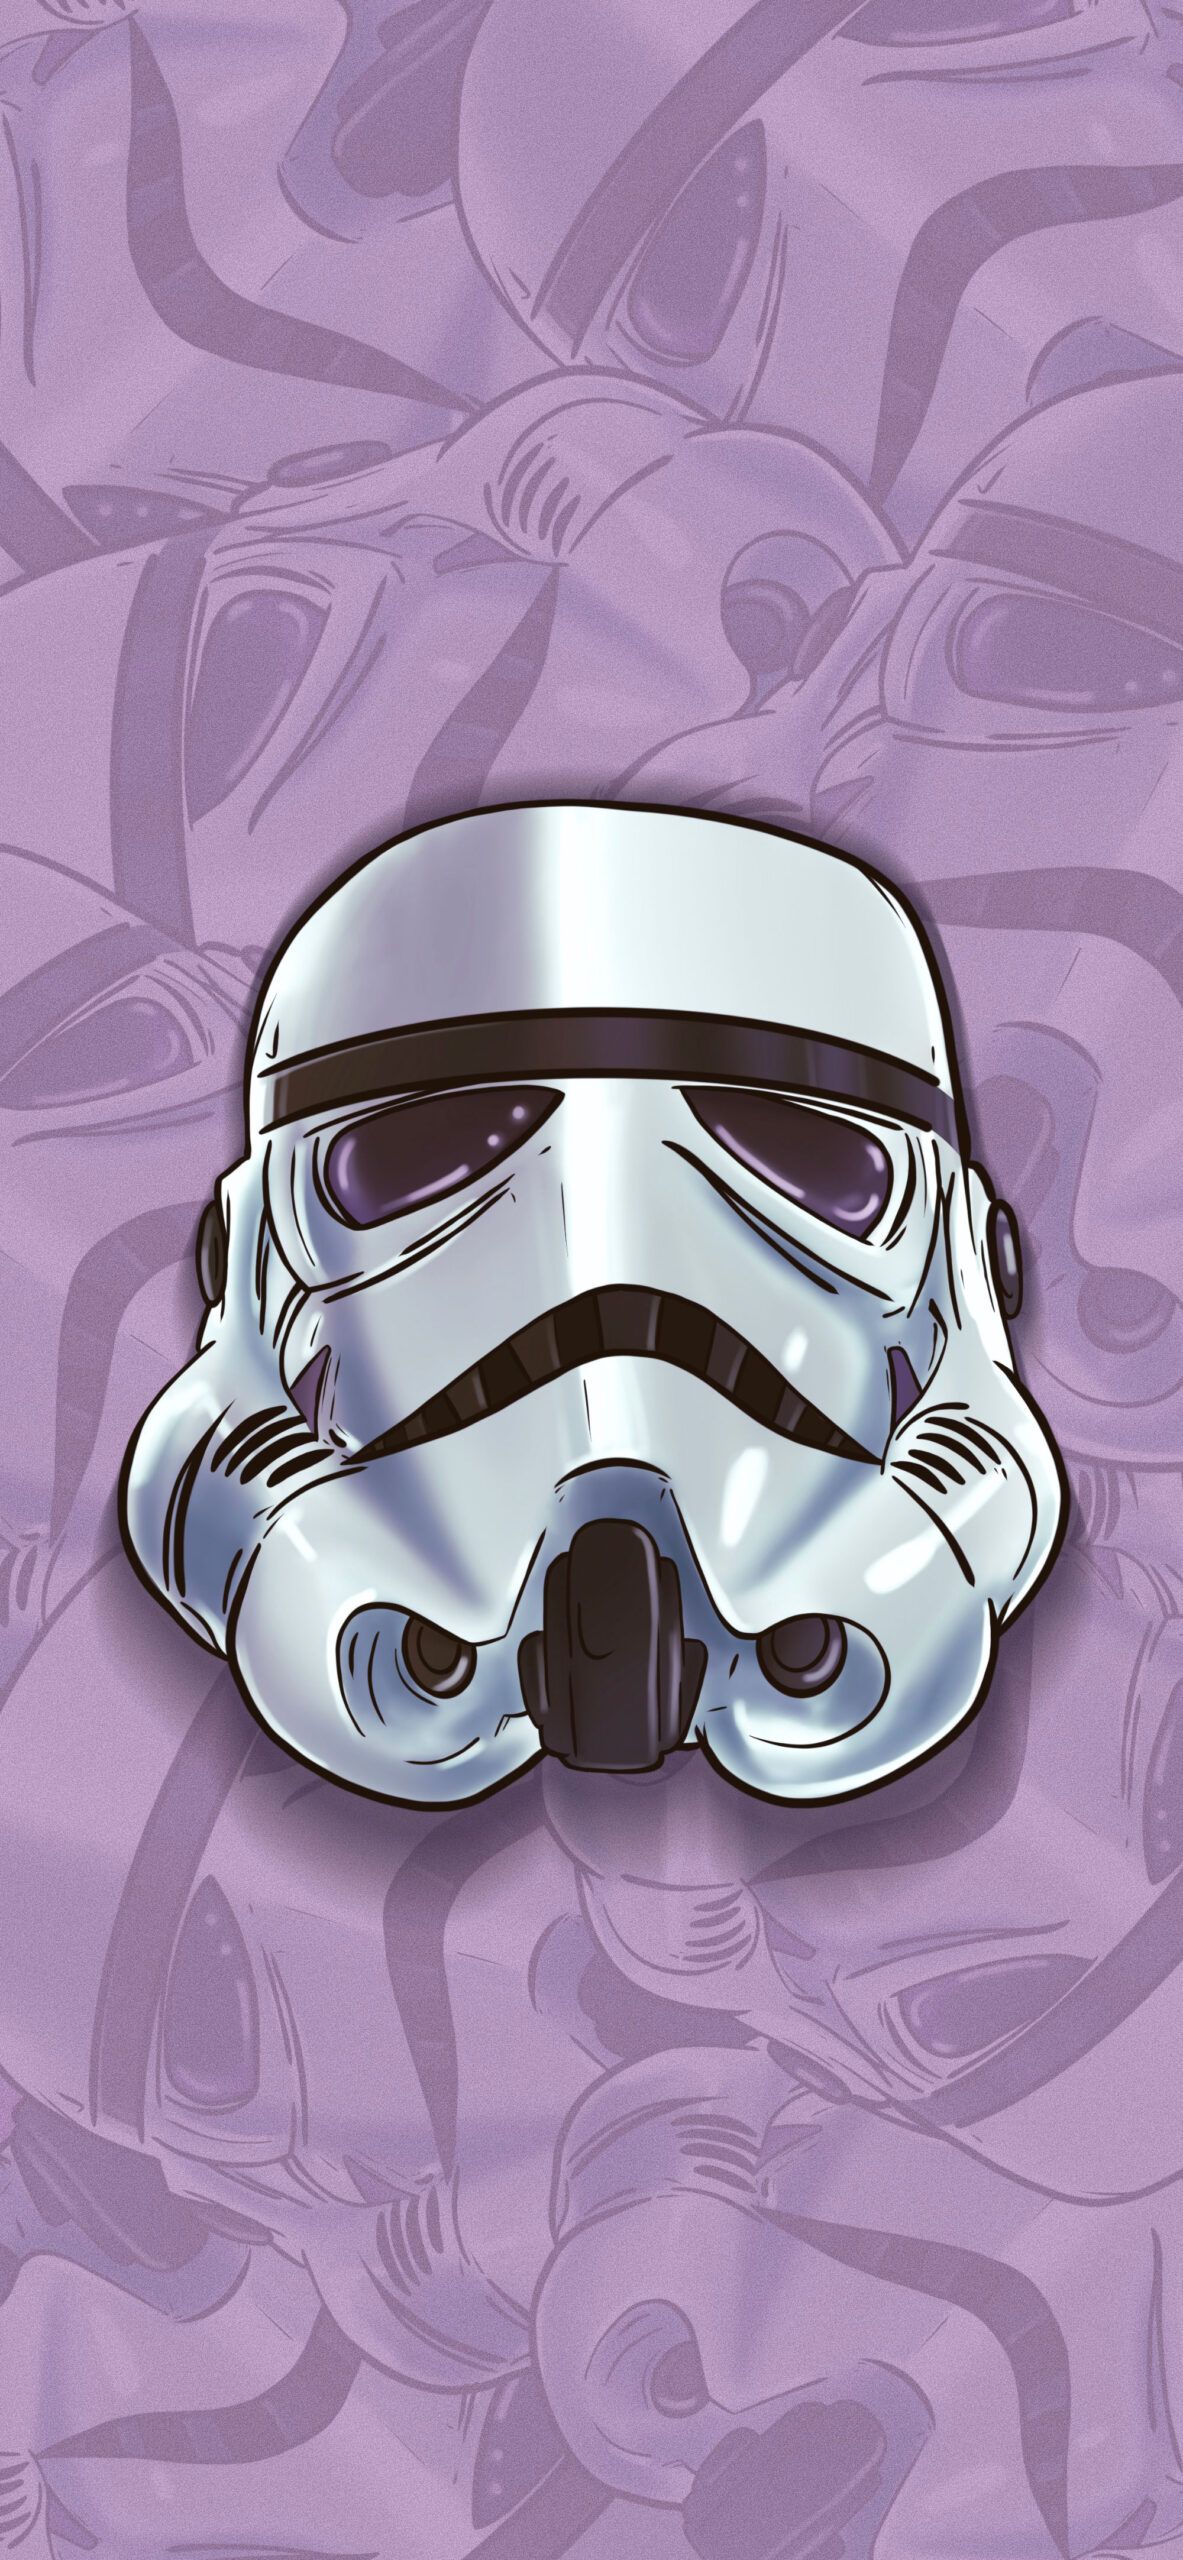 A close up of the storm trooper helmet - Star Wars